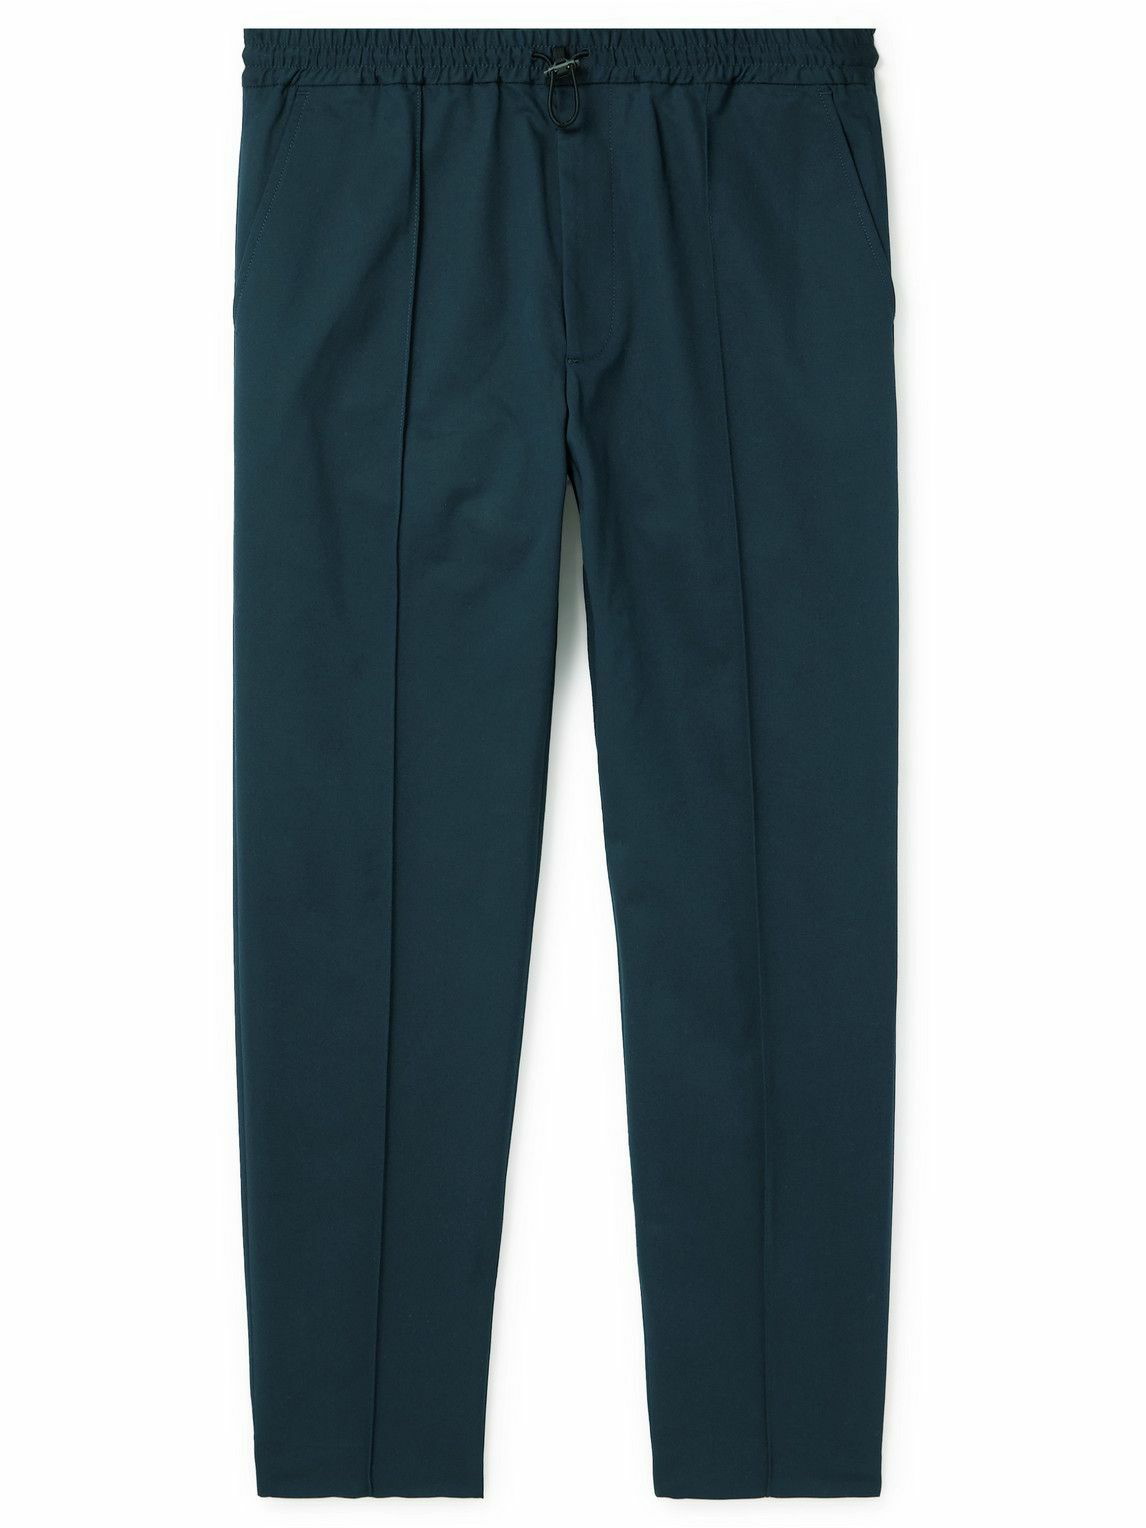 amidoa Men's Solid Cotton Line Pants Elastic Waist Baggy Slacks Leisure  Tapered Trousers Travel Clothing - Walmart.com